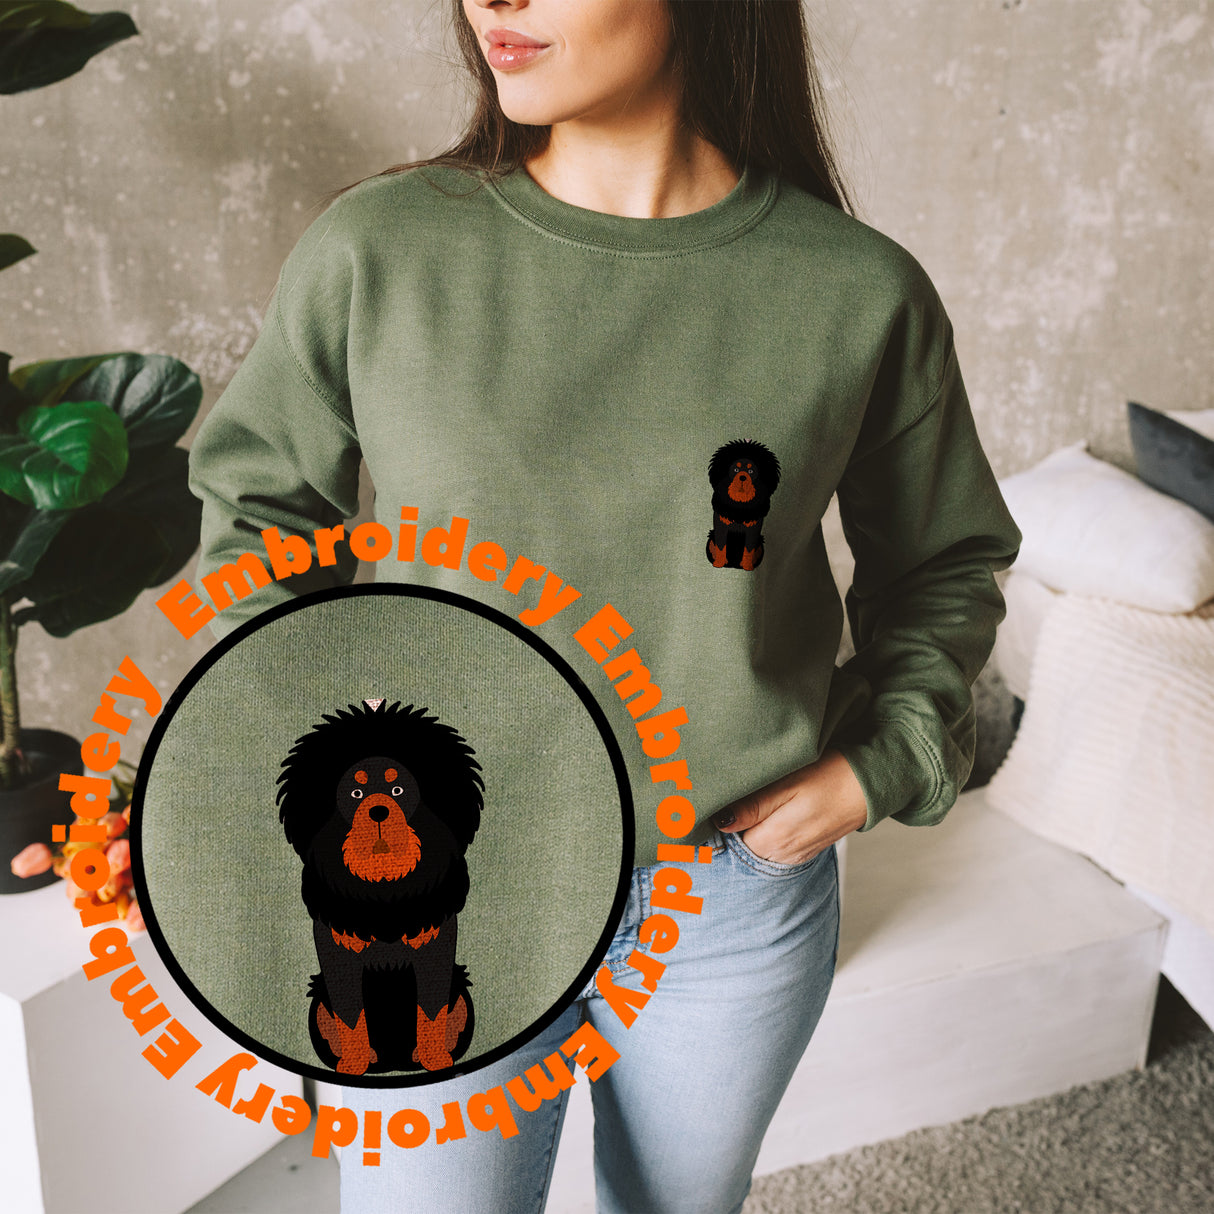 Tibetan Mastiff Dog Embroidery Adult Unisex Sweatshirt